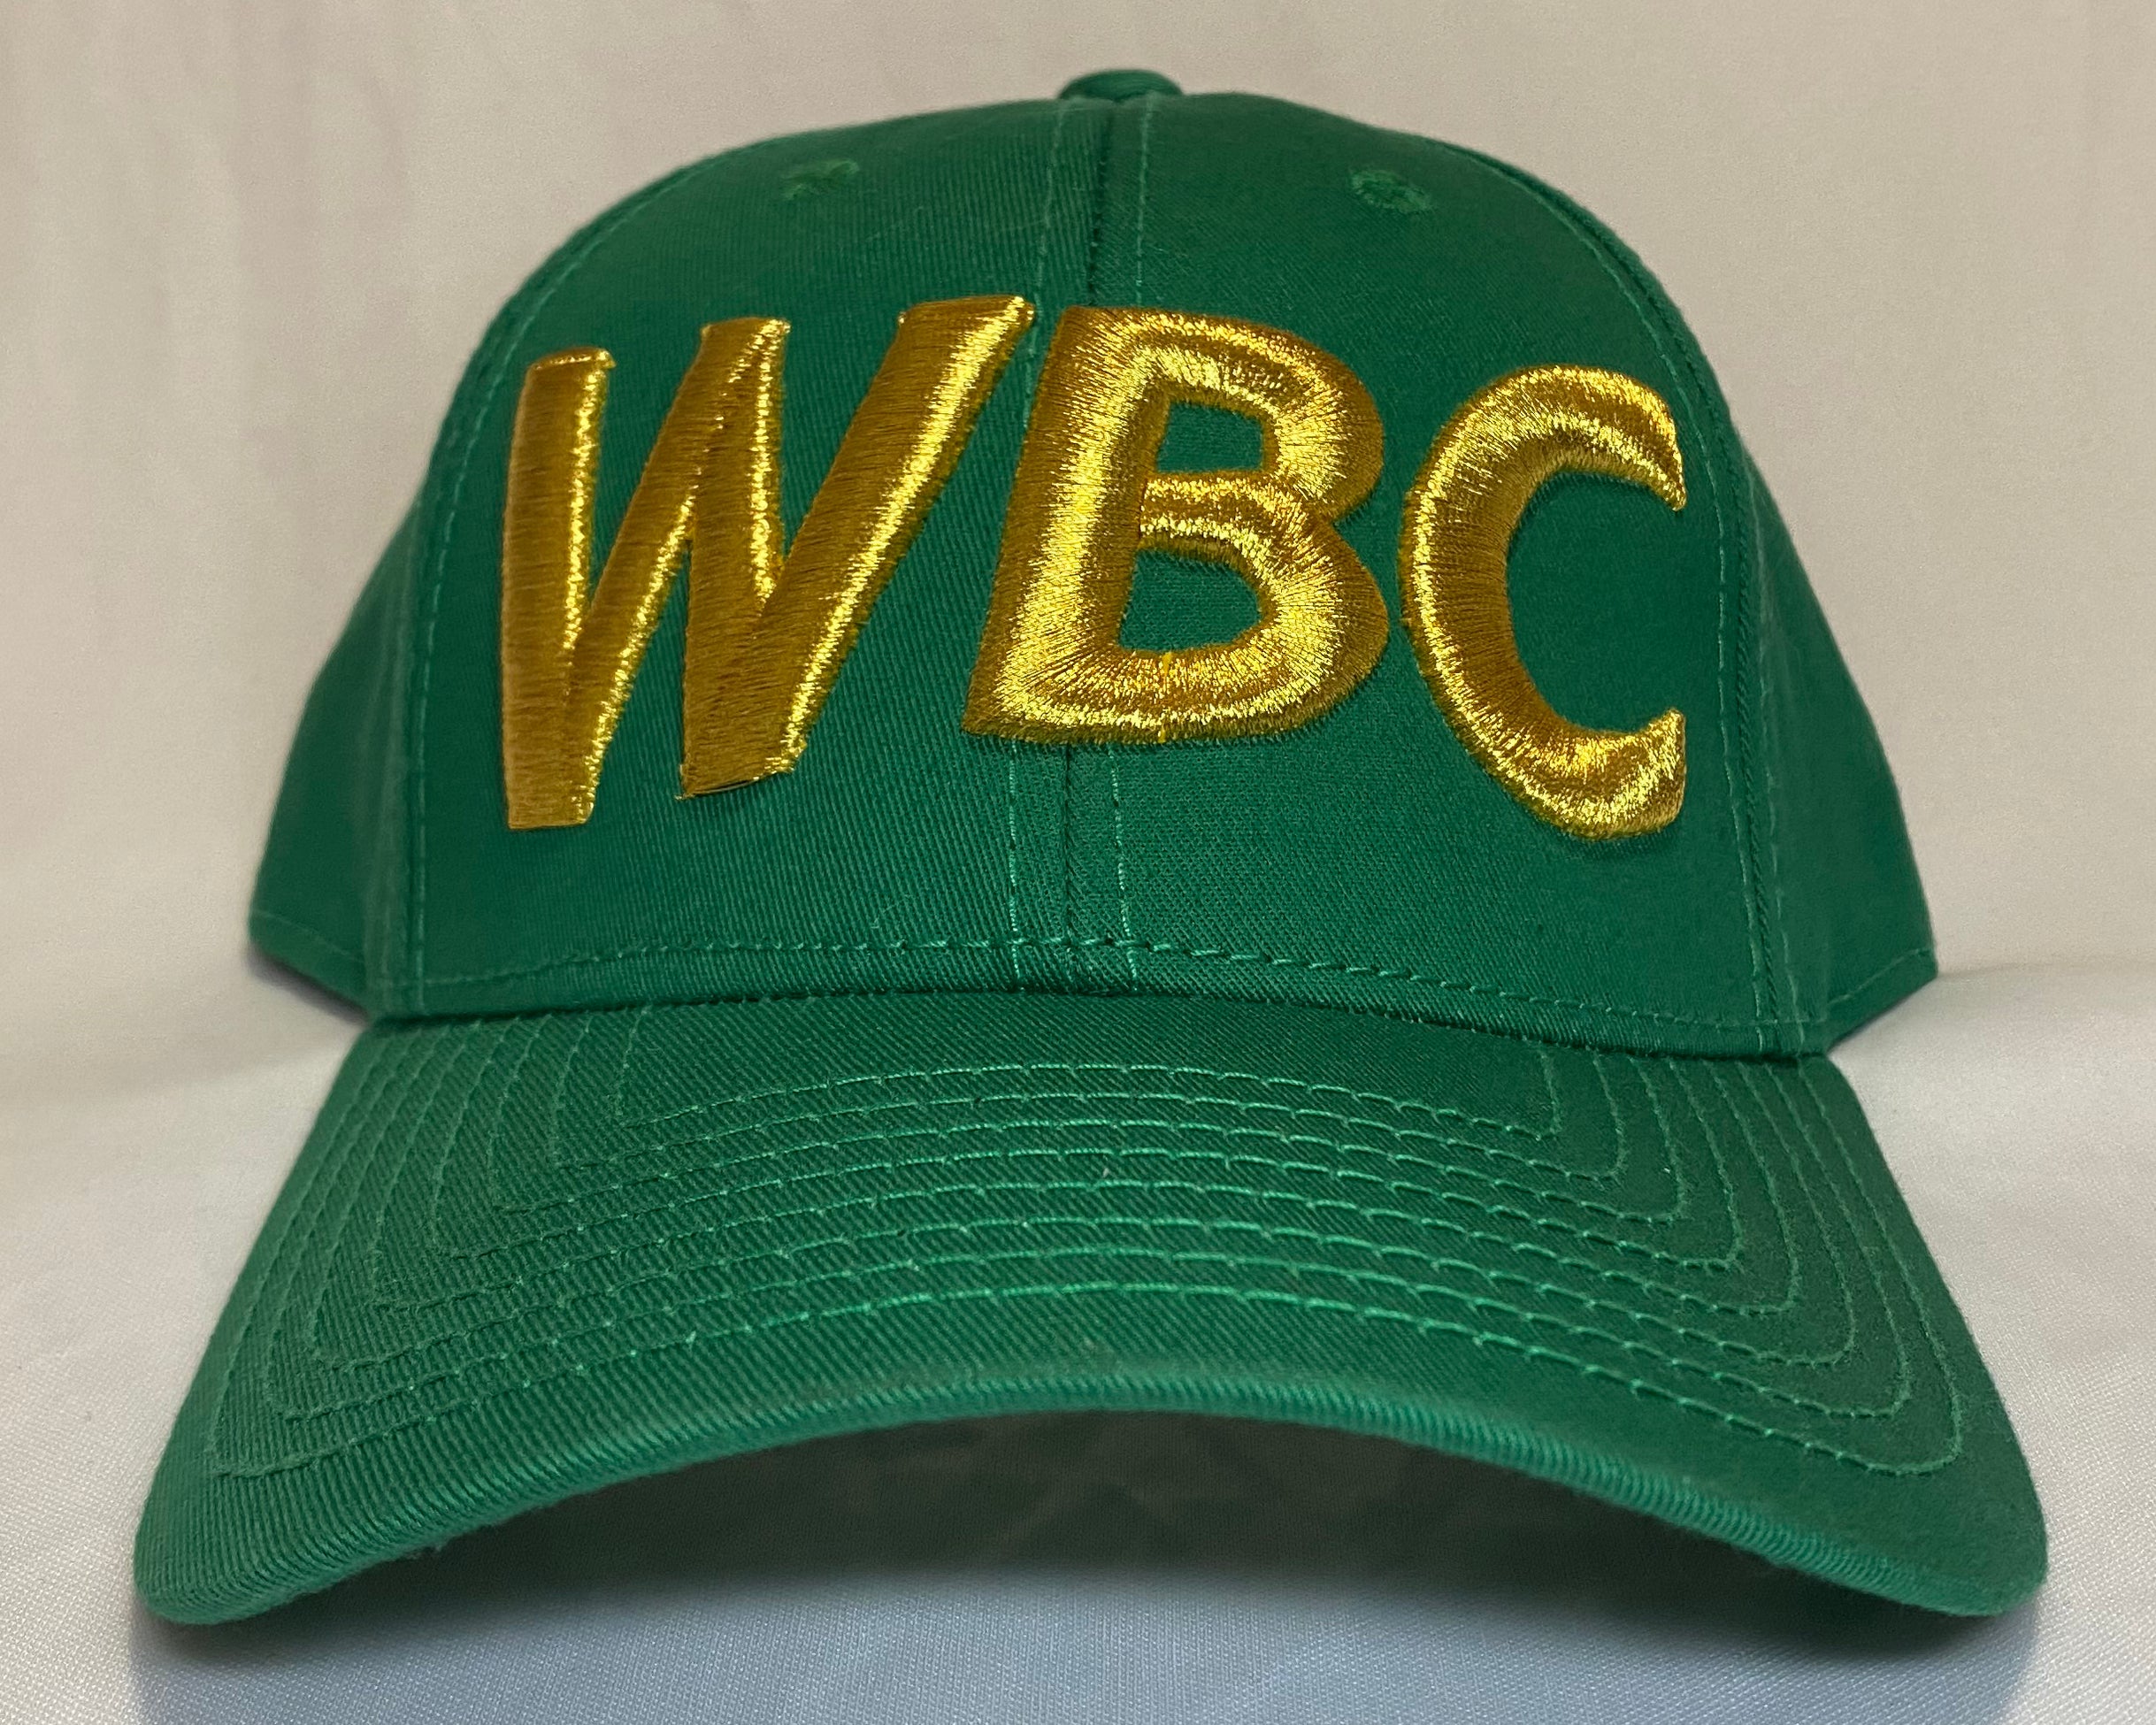 GREEN BASEBALL WBC HAT GOLD LETTERING